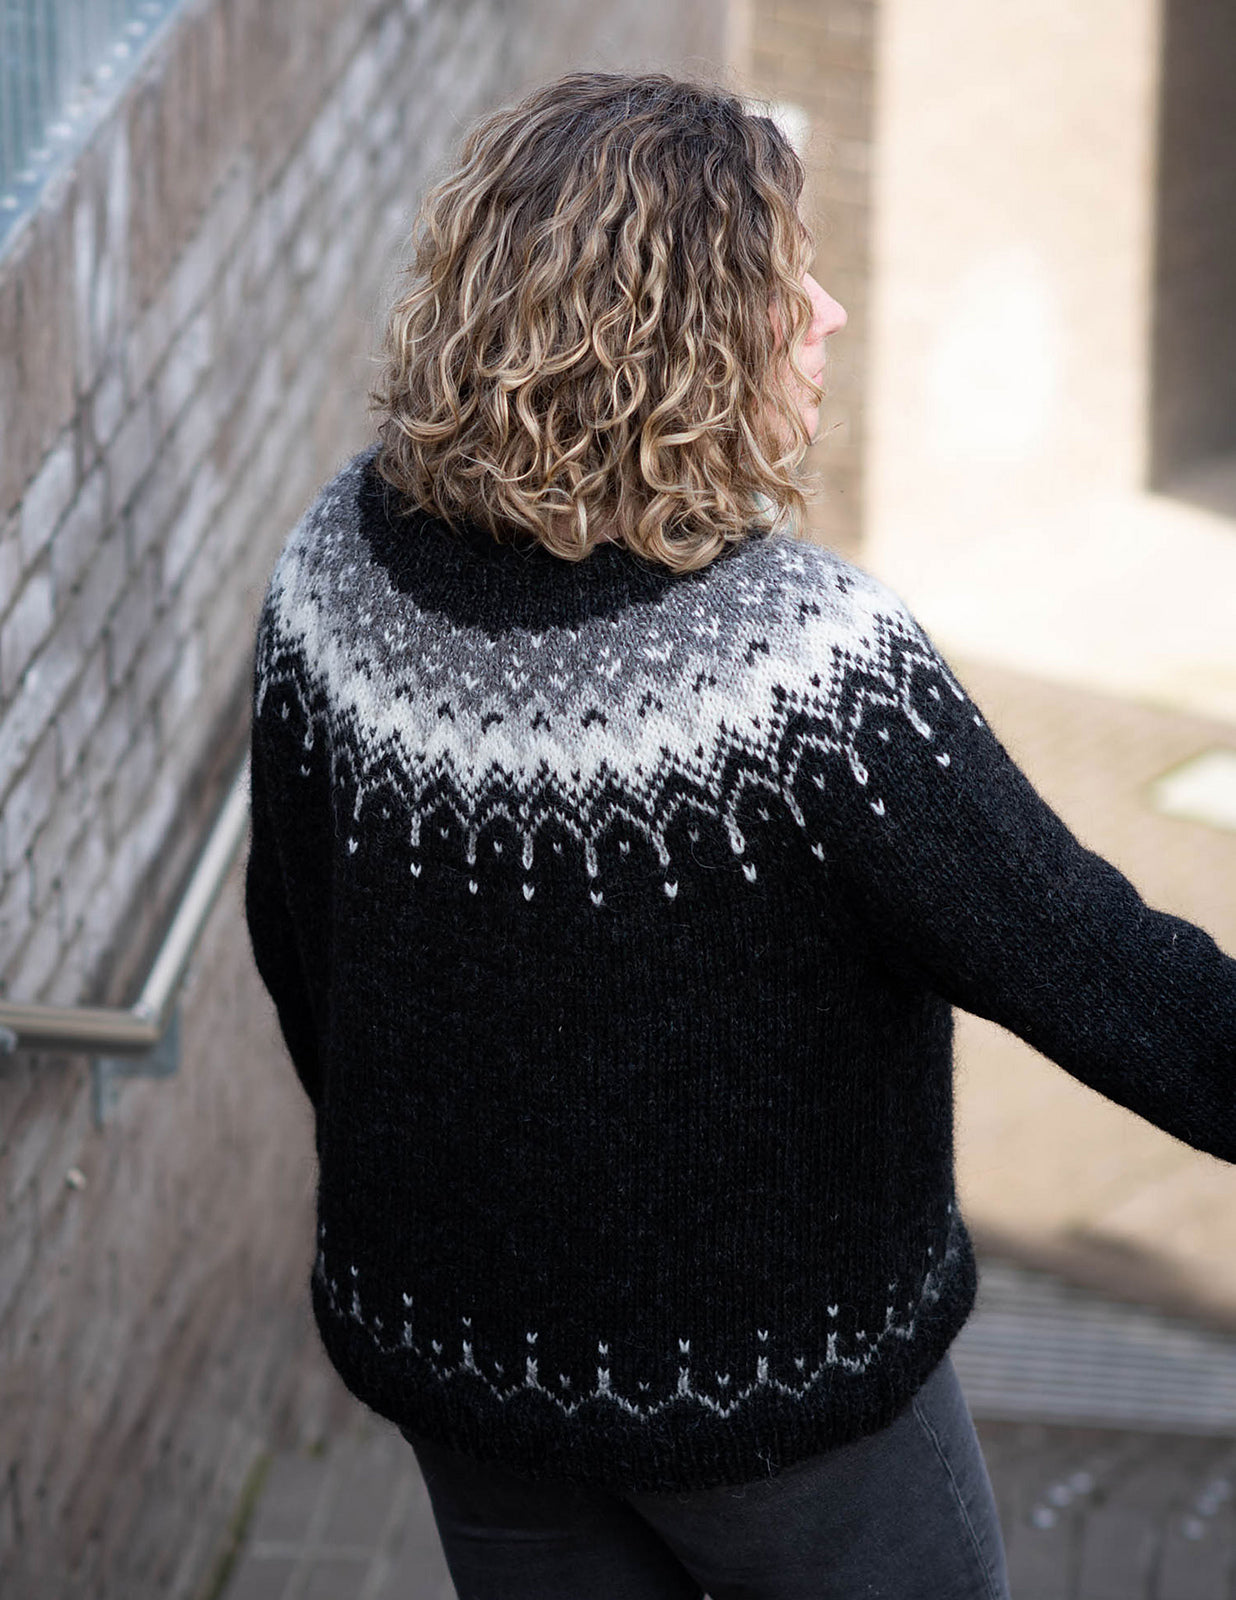 Bleideag sweater knitting pattern by Ysolda Teague